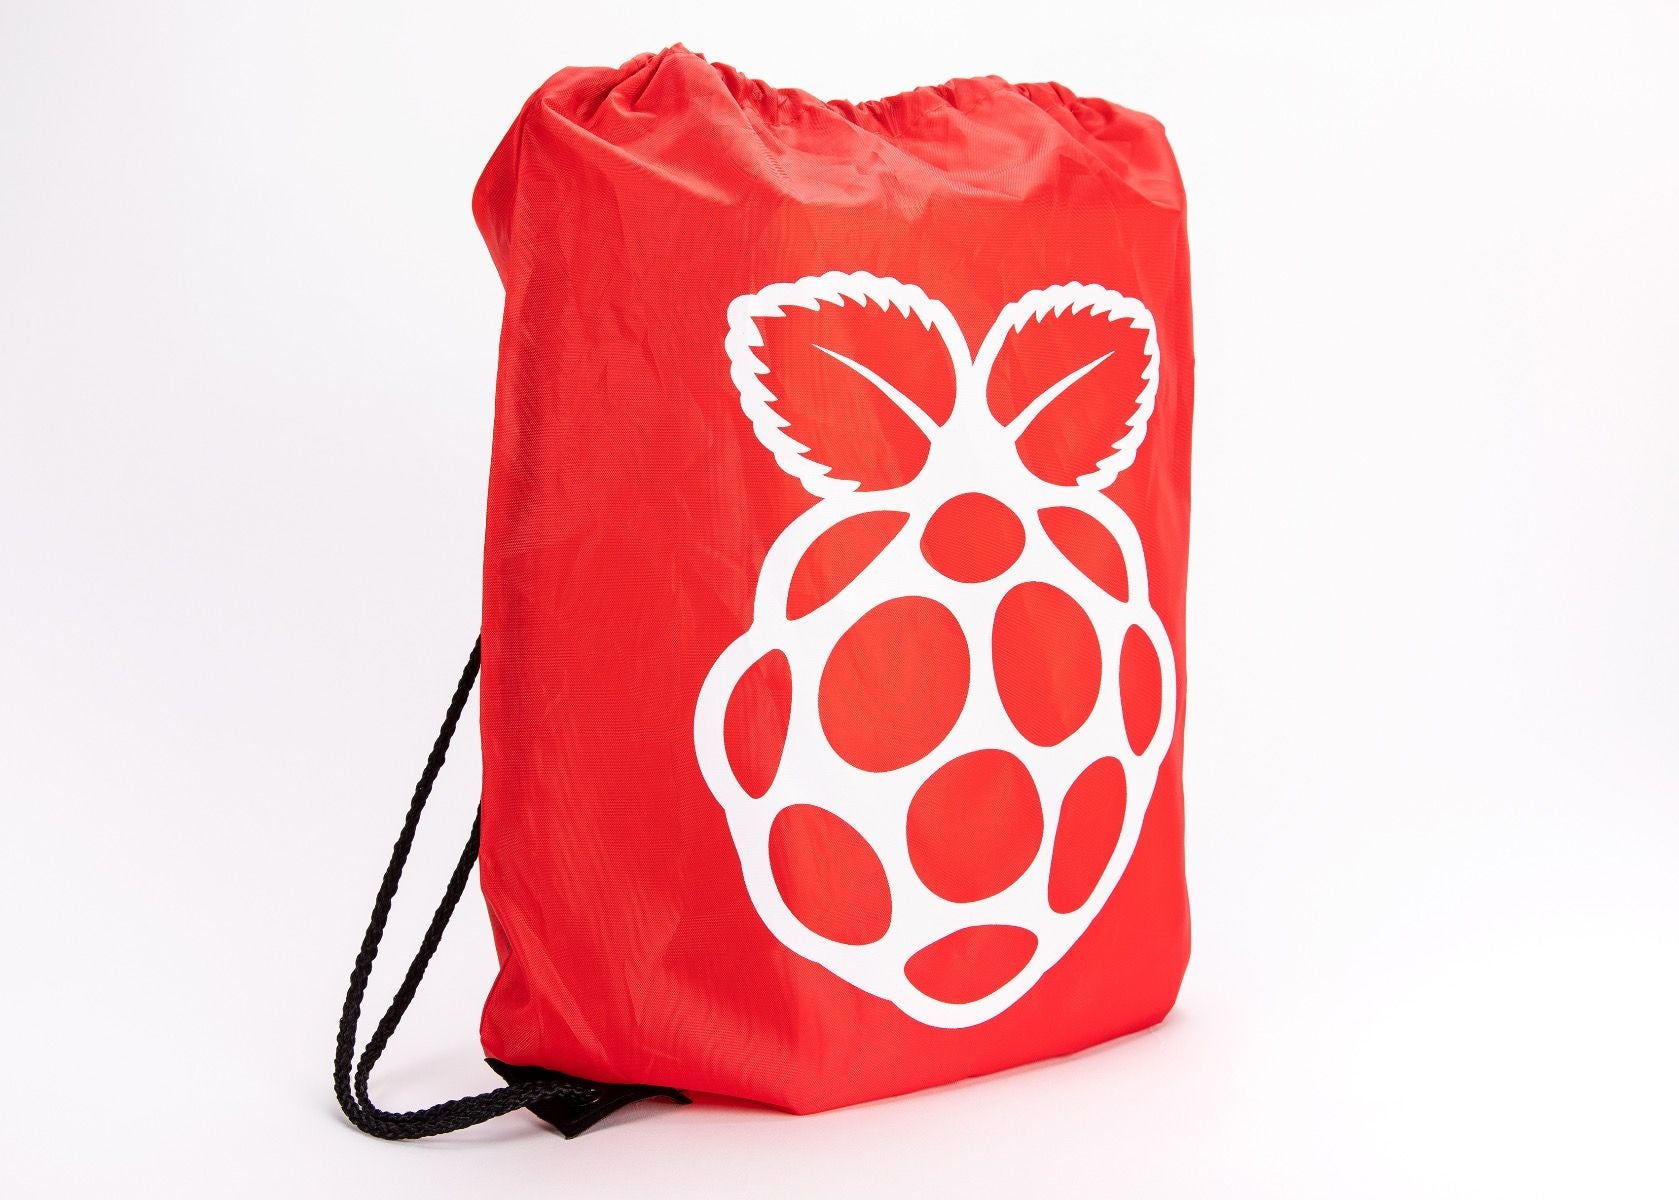 Raspberry Pi Official Red Drawstring Bag